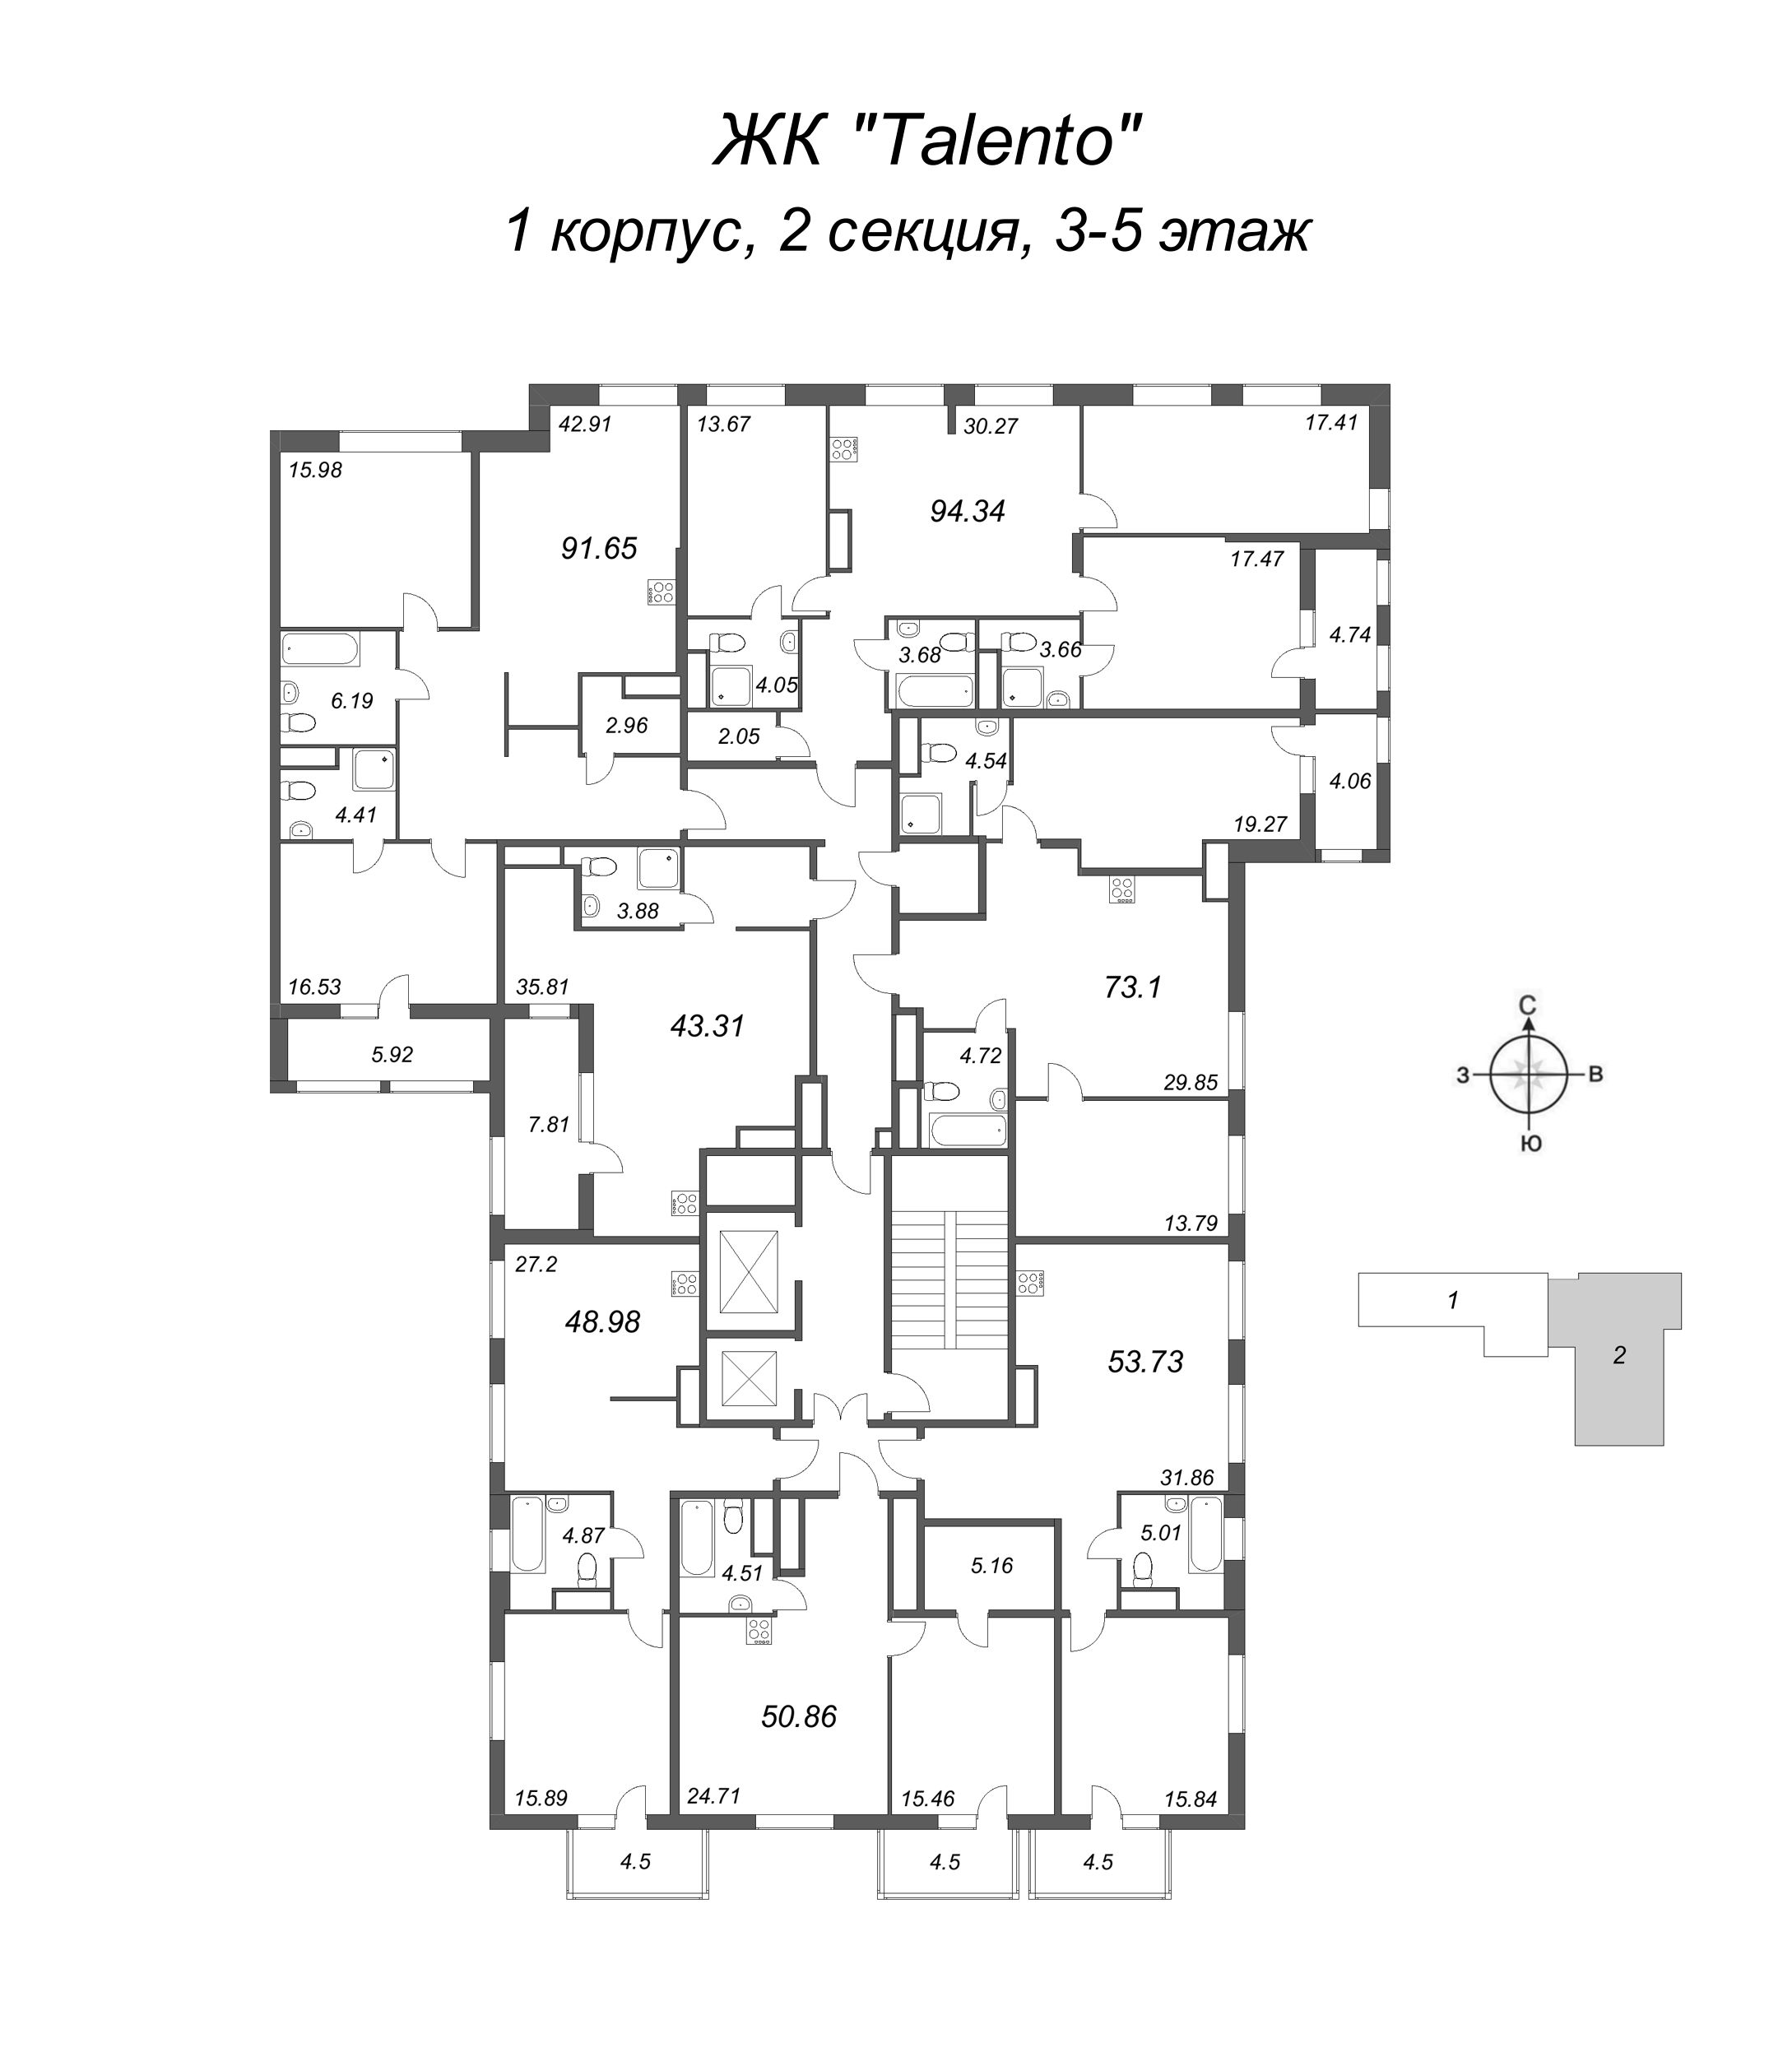 3-комнатная (Евро) квартира, 91.65 м² - планировка этажа